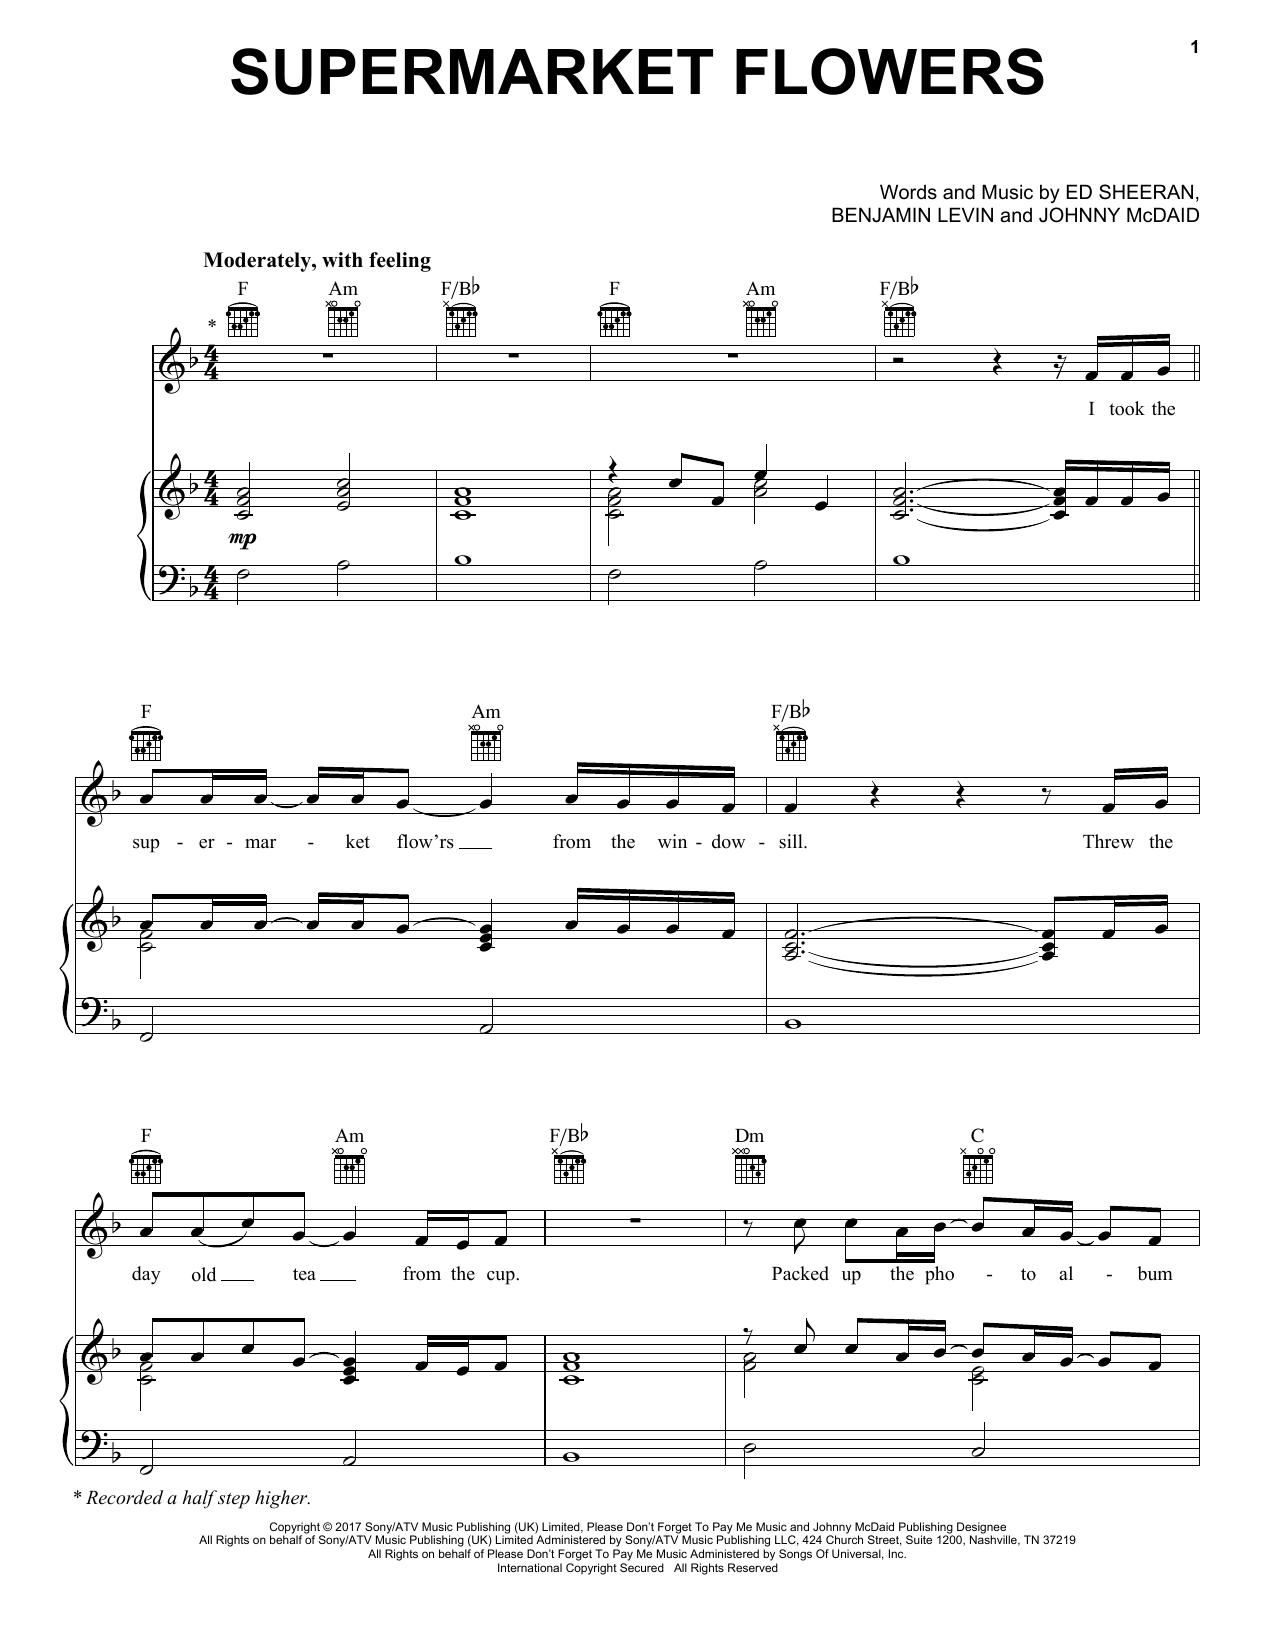 Ed Sheeran Supermarket Flowers Sheet Music Notes & Chords for Guitar Tab - Download or Print PDF